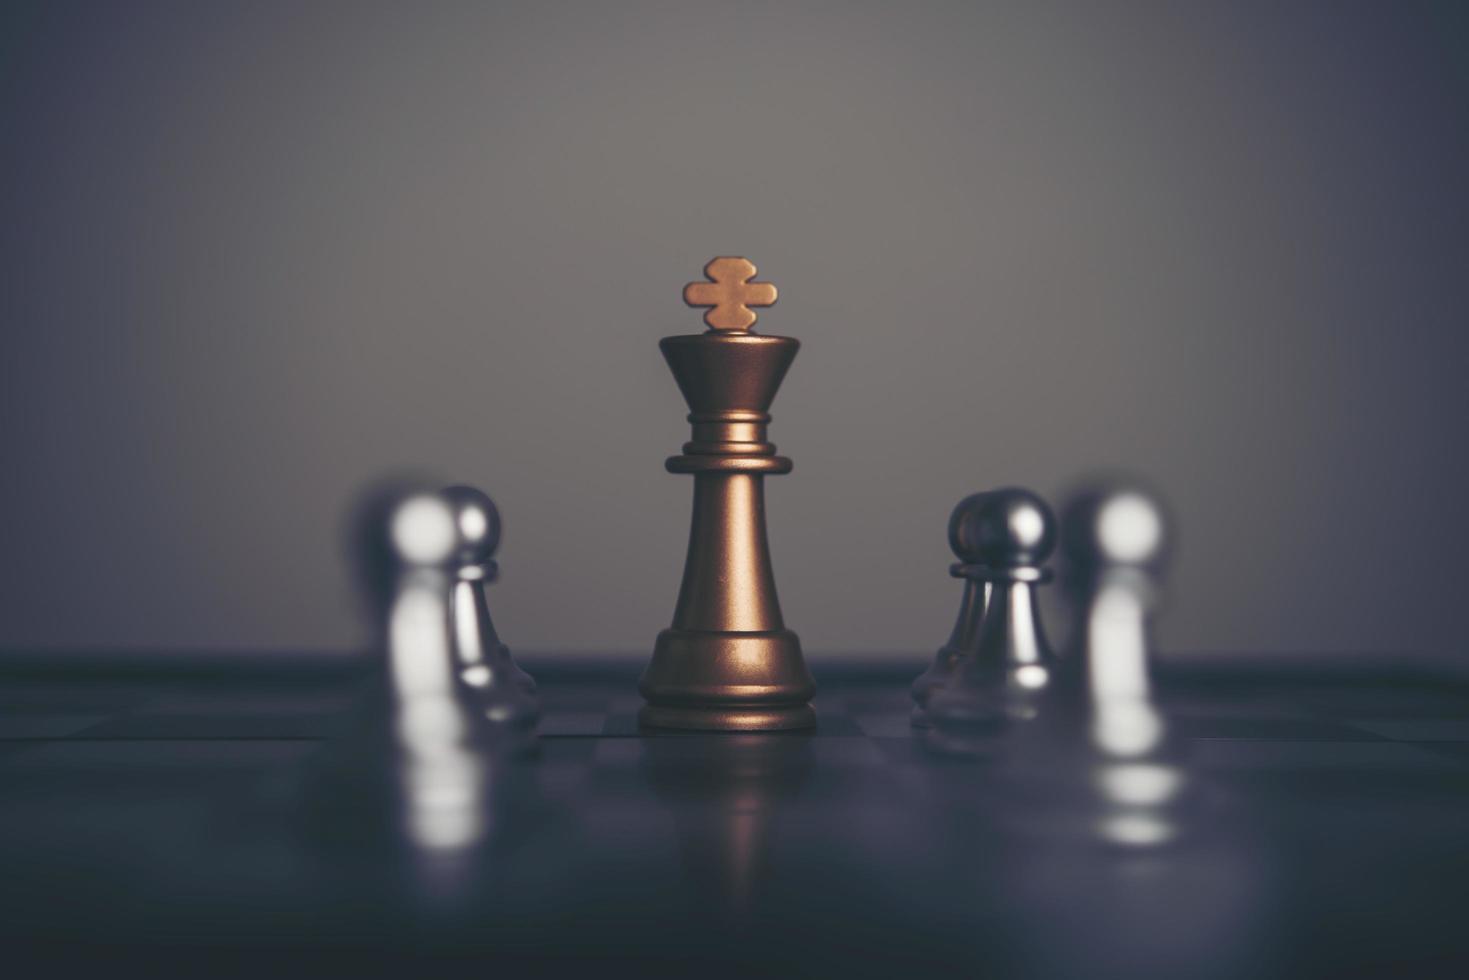 King and knight chess setup on dark background photo